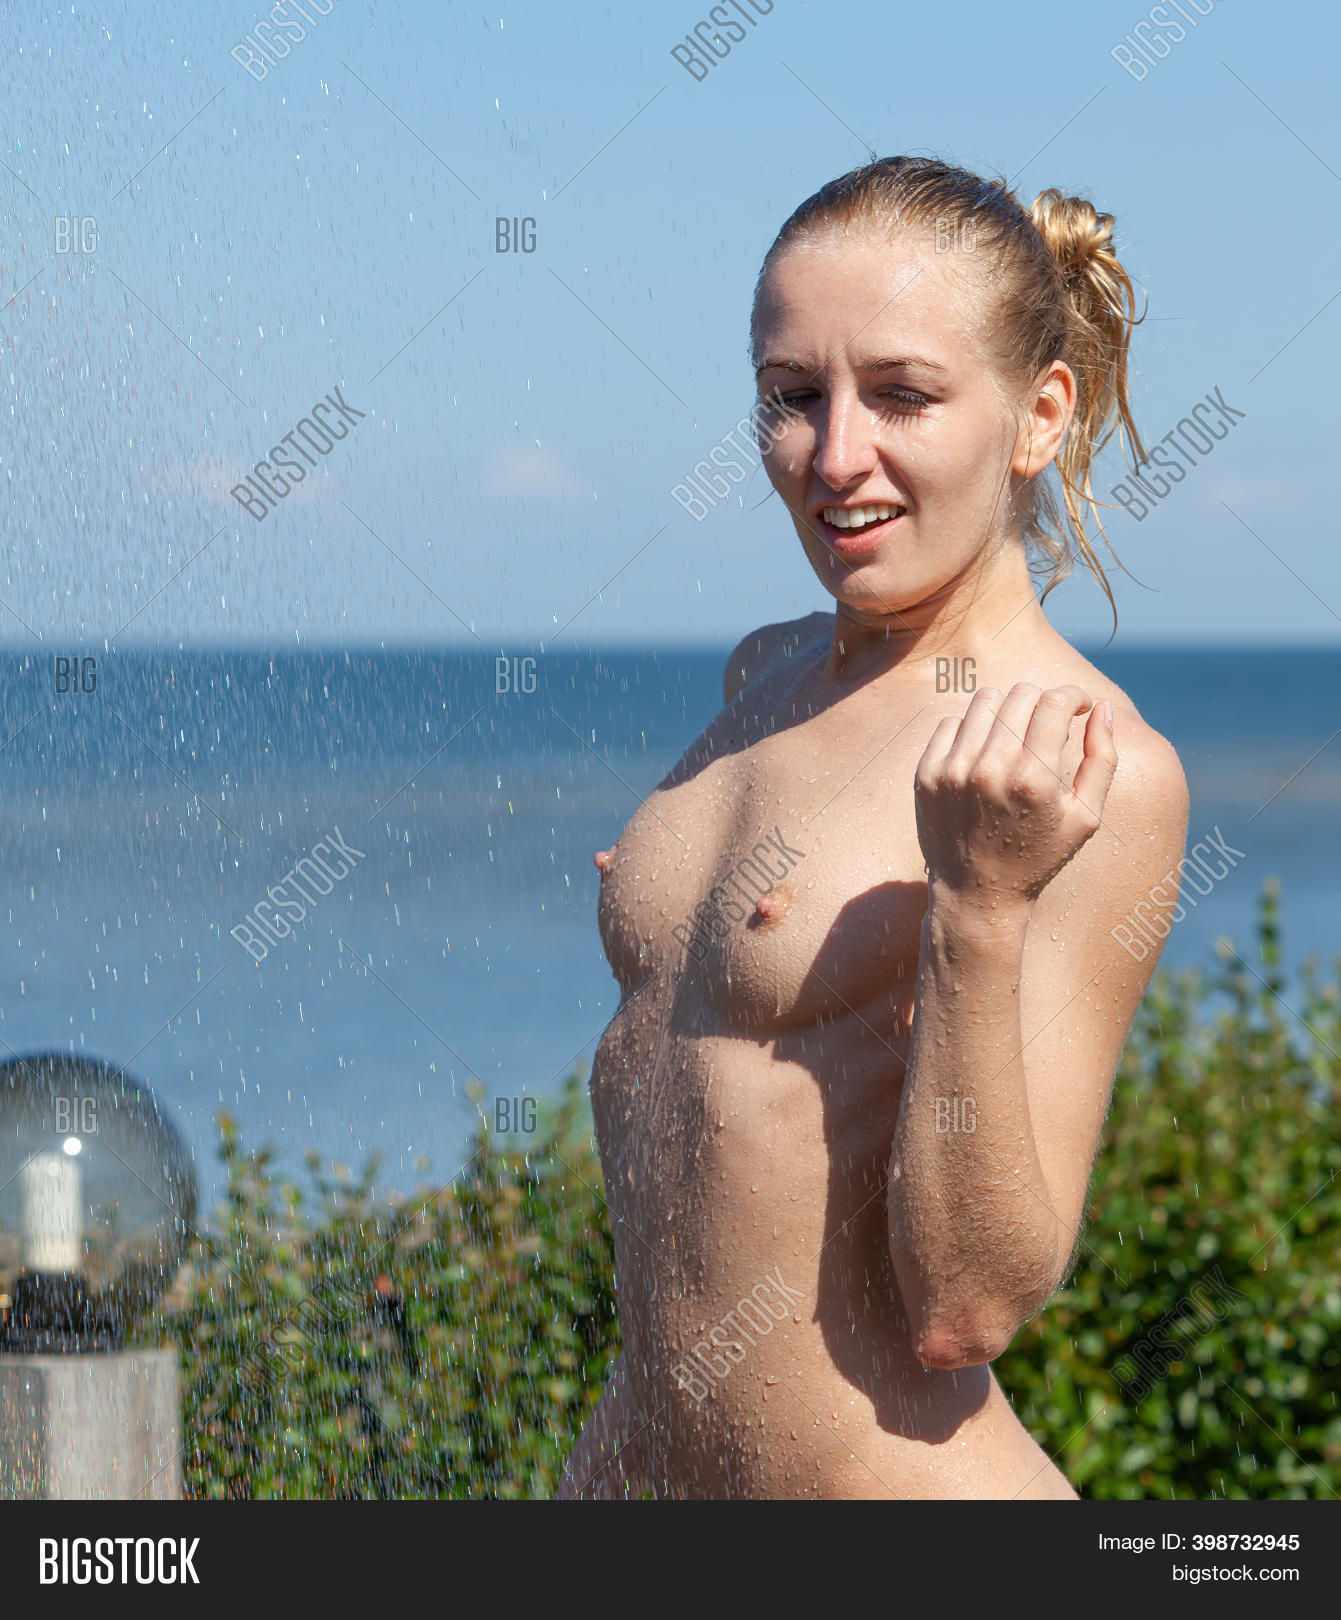 ashley sharper add photo young female nude photos